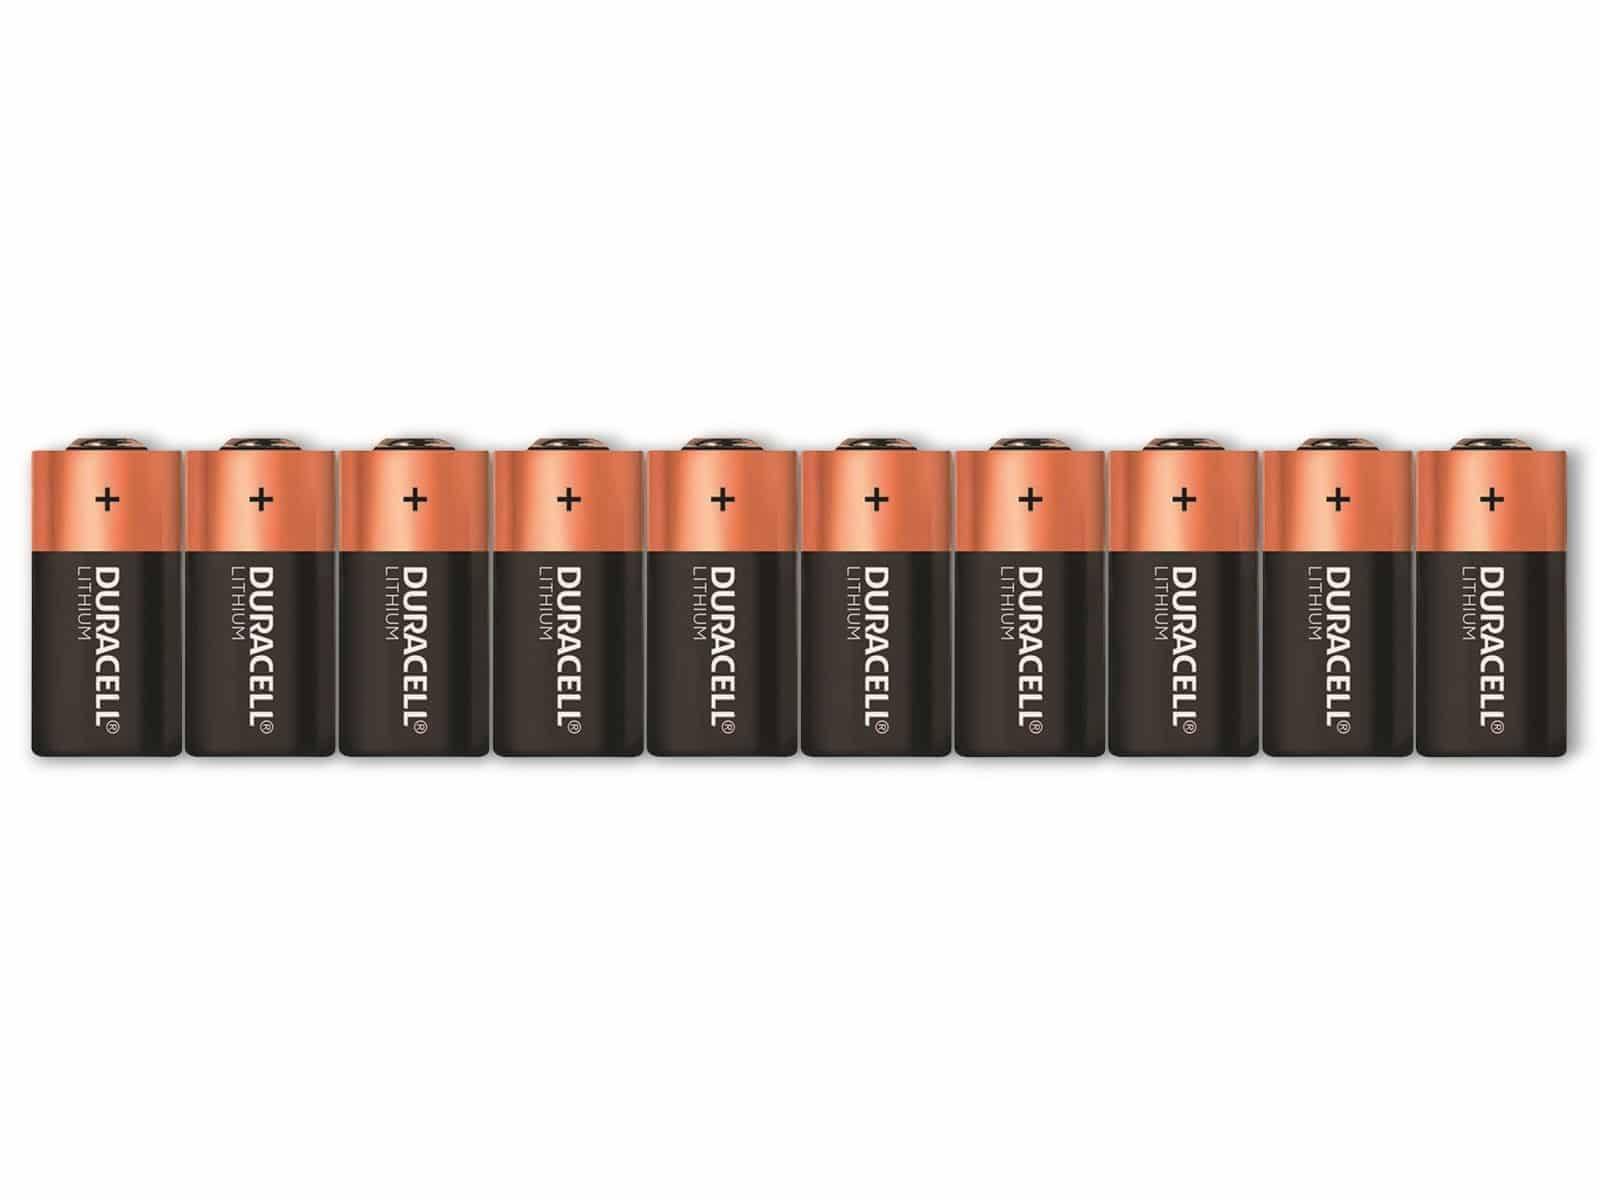 bånd nøjagtigt efterklang Duracell Ultra DL123A Camera battery CR123A Lithium 1400 mAh 3 V 10 pc(s) |  Conrad.com